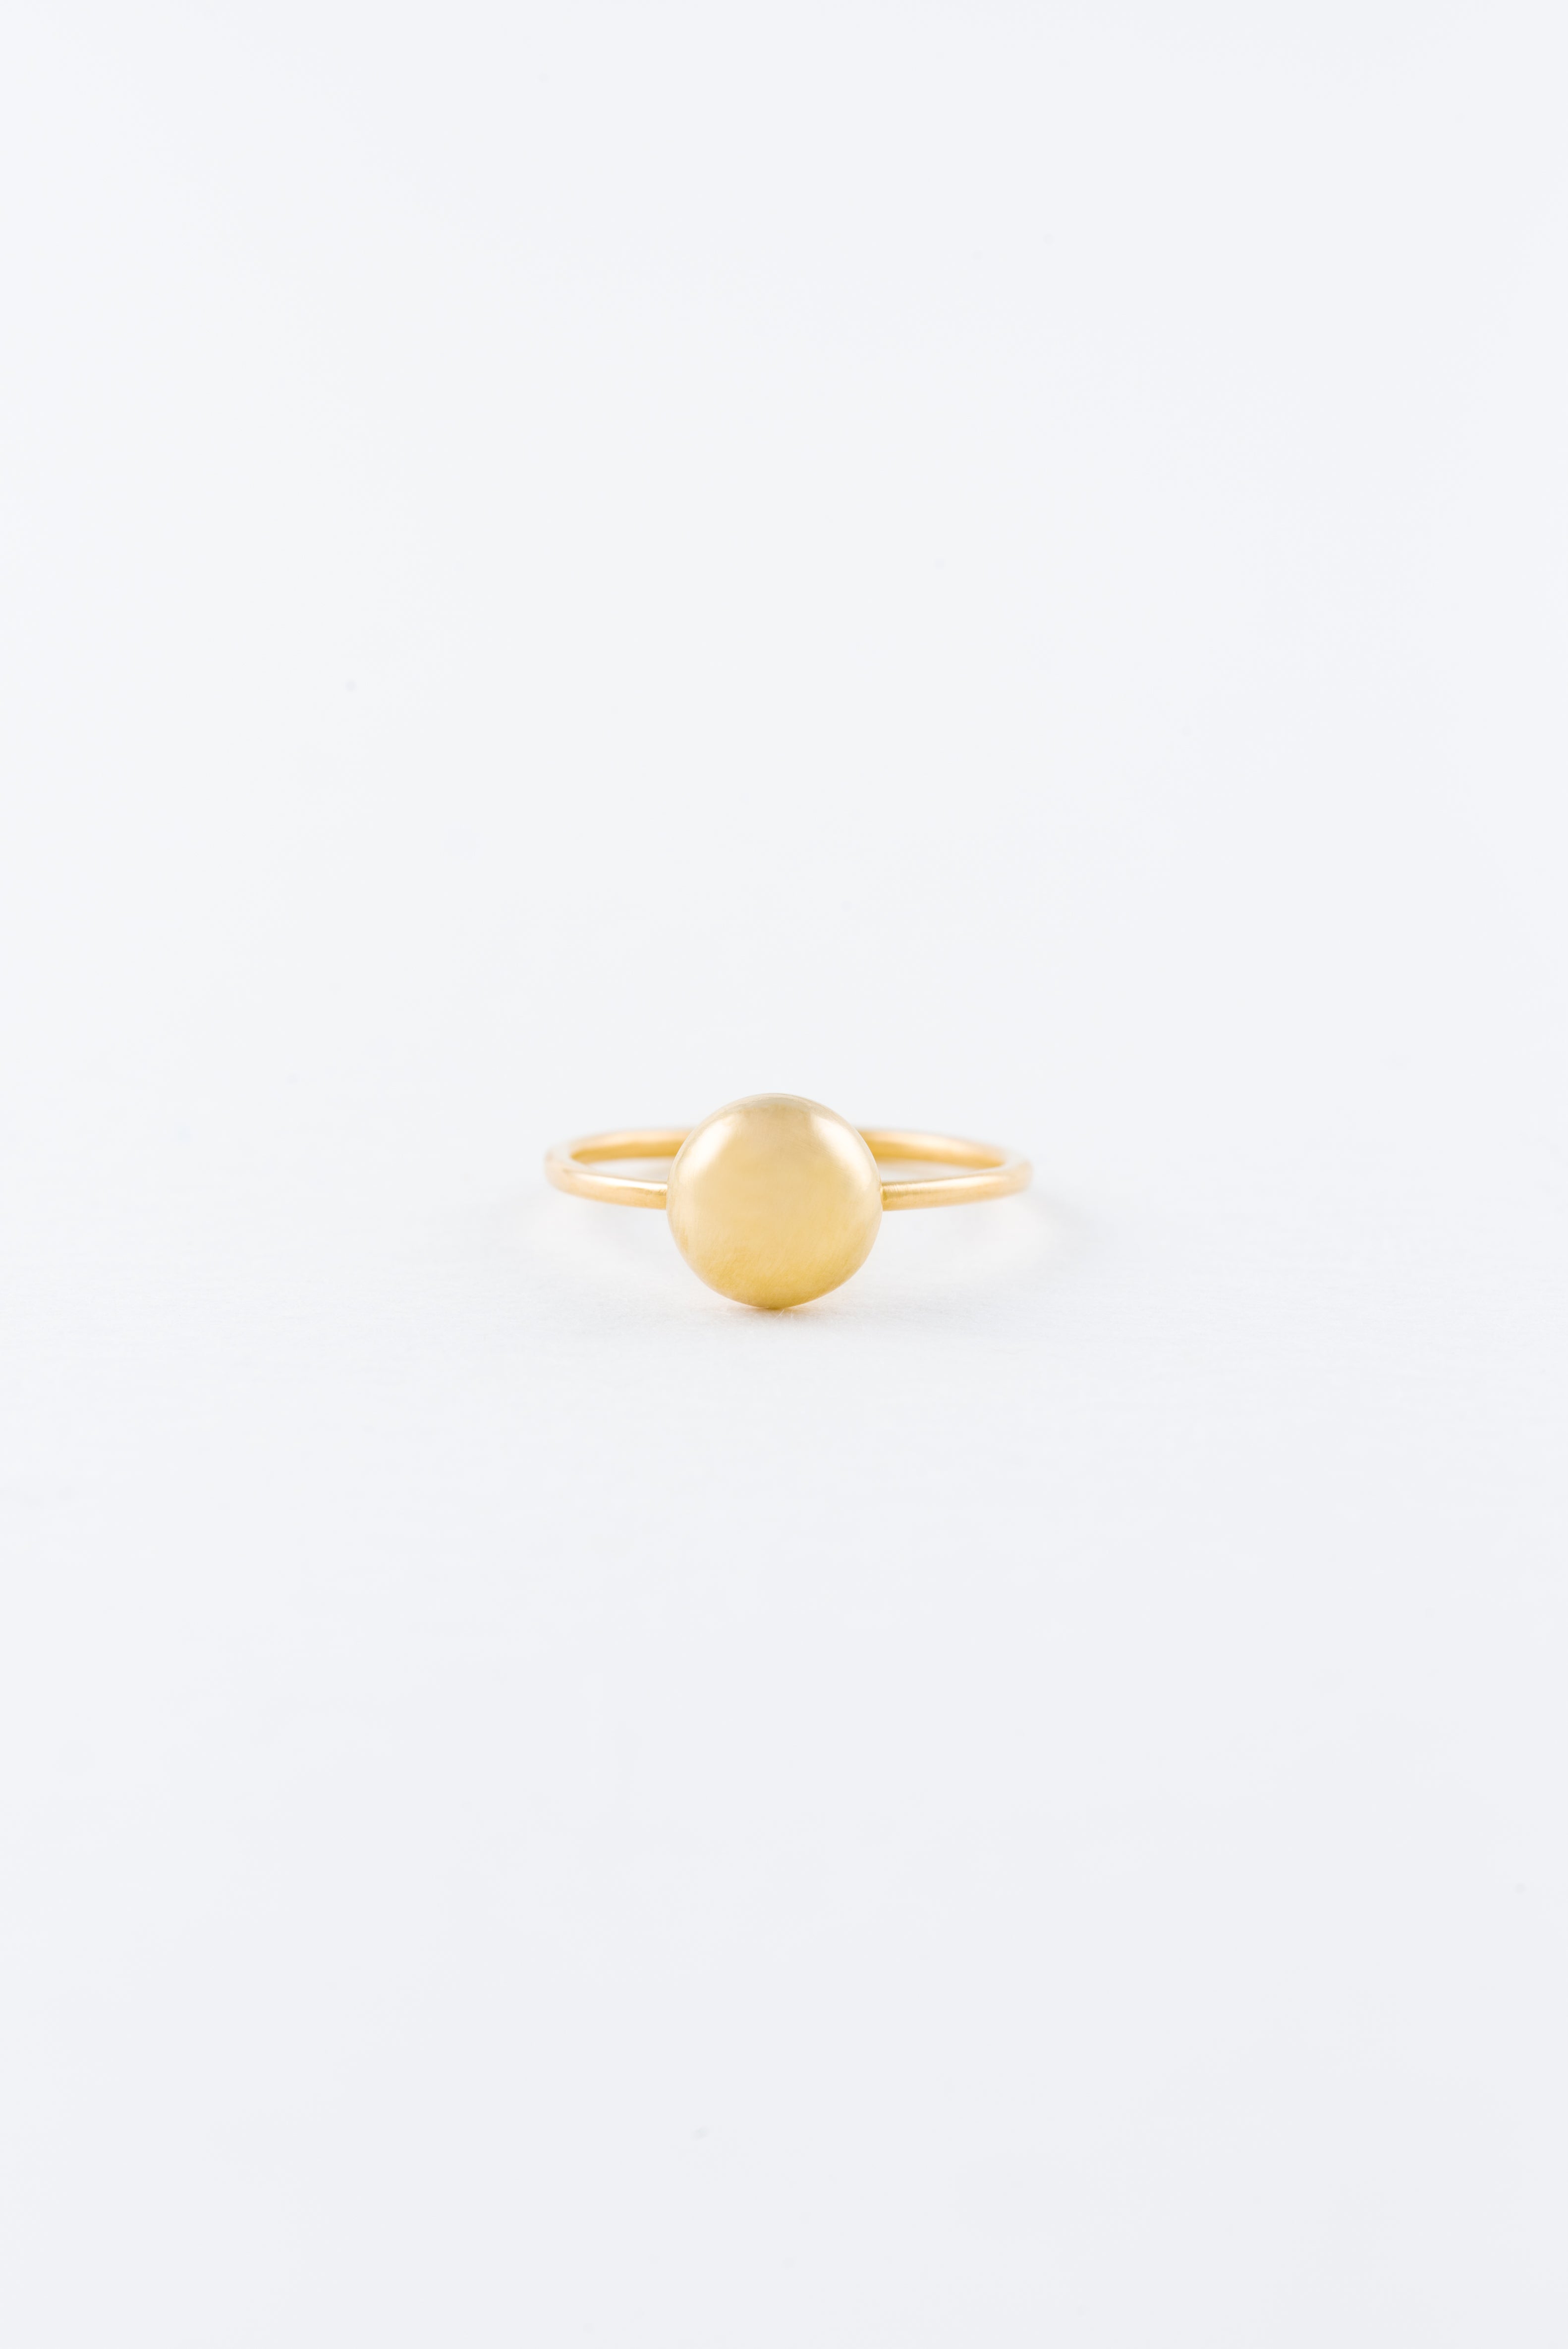 Gold Single Rock Necklace – ISA NOY